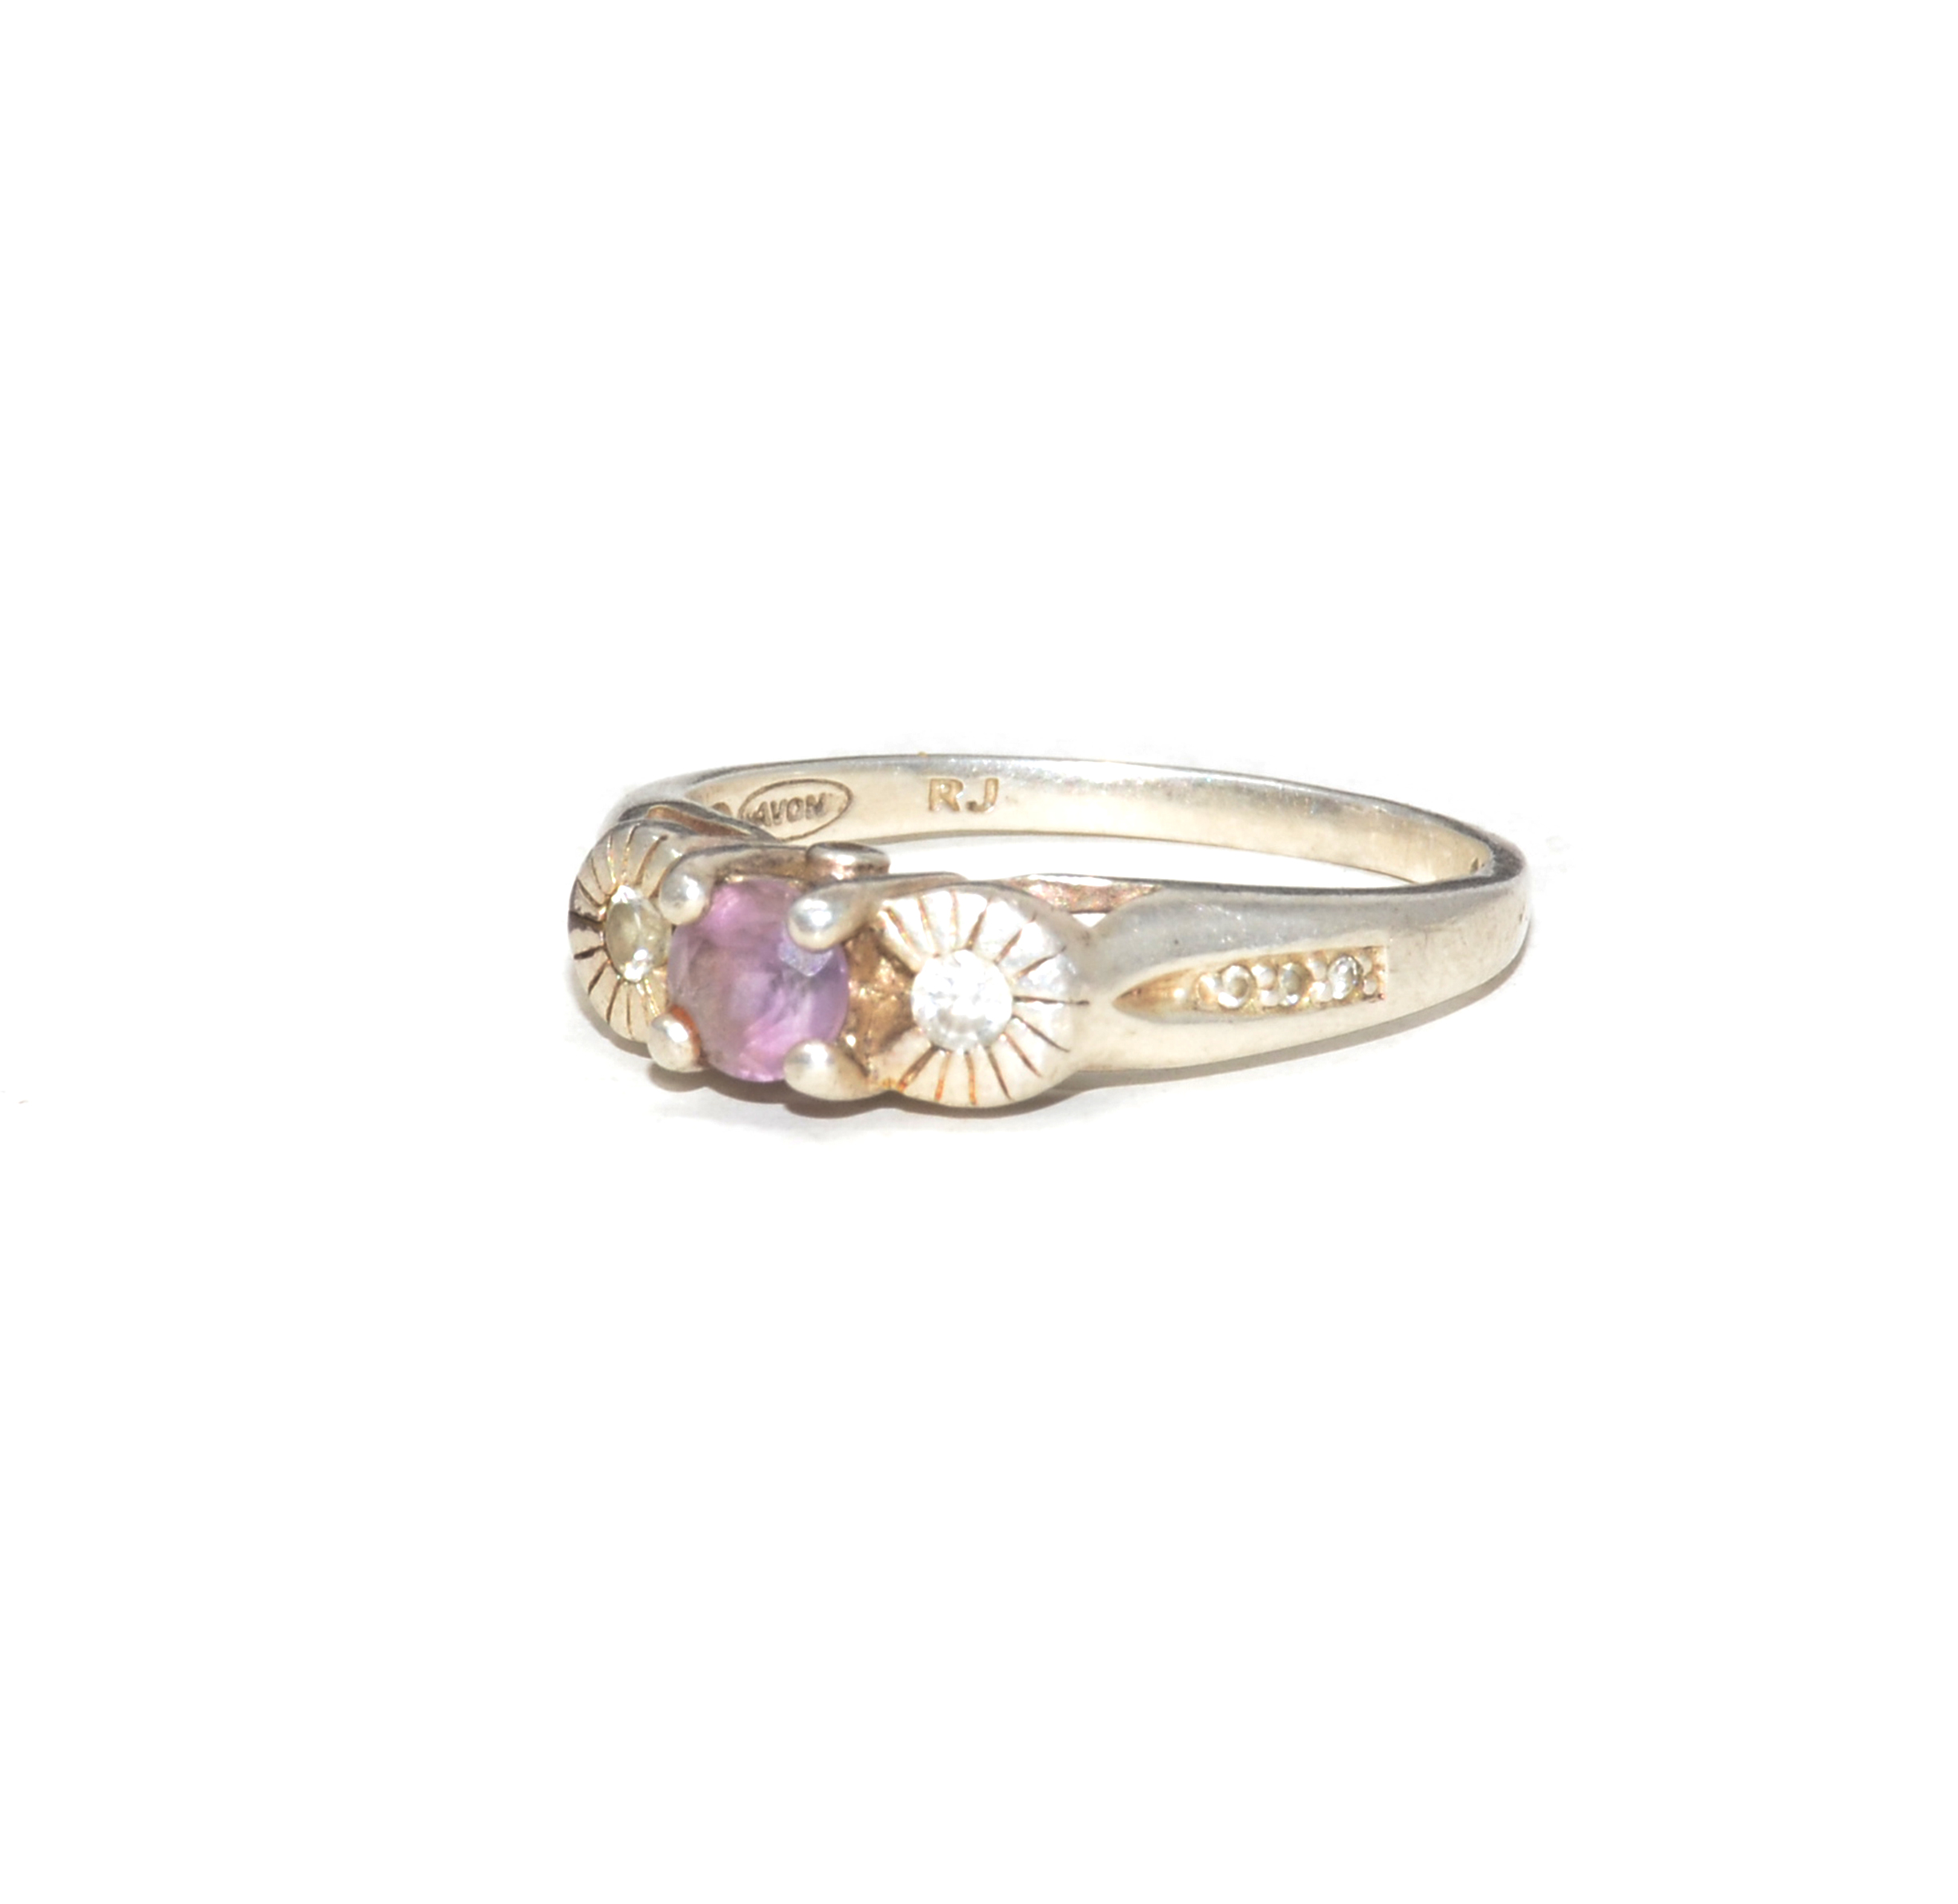 AVON STERLING SILVER EMERALD CUT CZ ENGAGEMENT RING AND BAND SET #avon #ring  #sterlingsilver | Cz rings engagement, Engagement rings, Avon jewelry